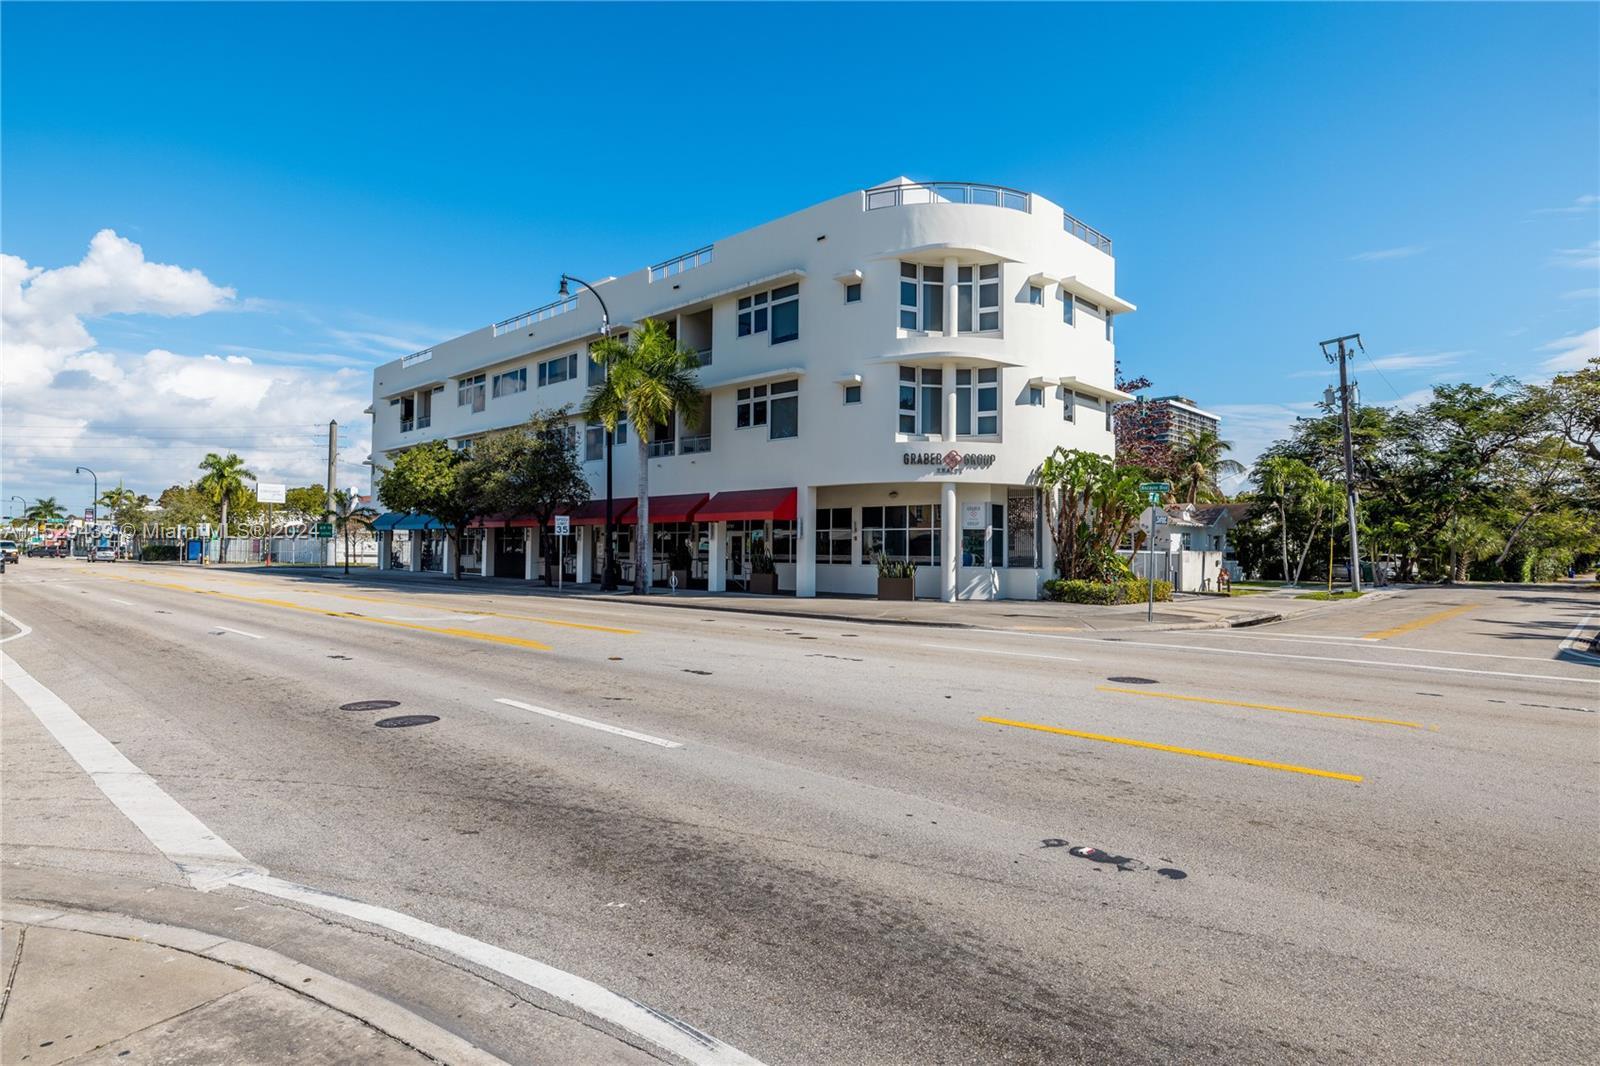 Photo of 6701 Biscayne Blvd in Miami, FL